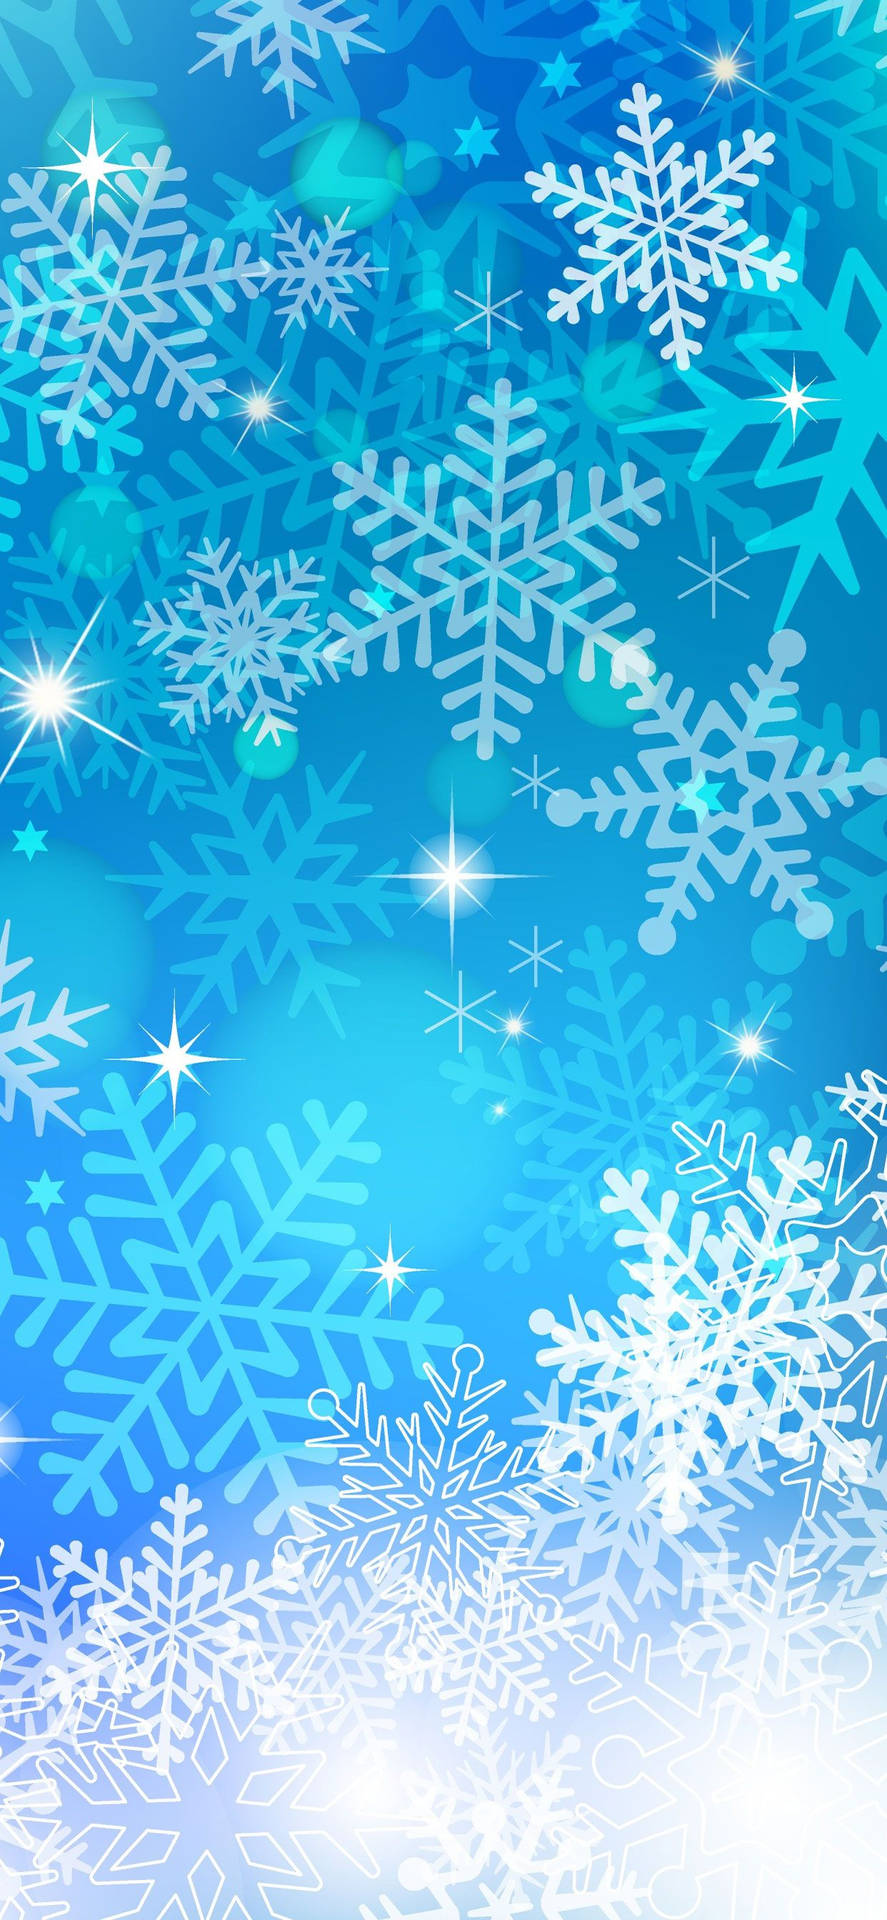 Winter snowflake iPhone wallpaper aesthetic  Free Photo  rawpixel